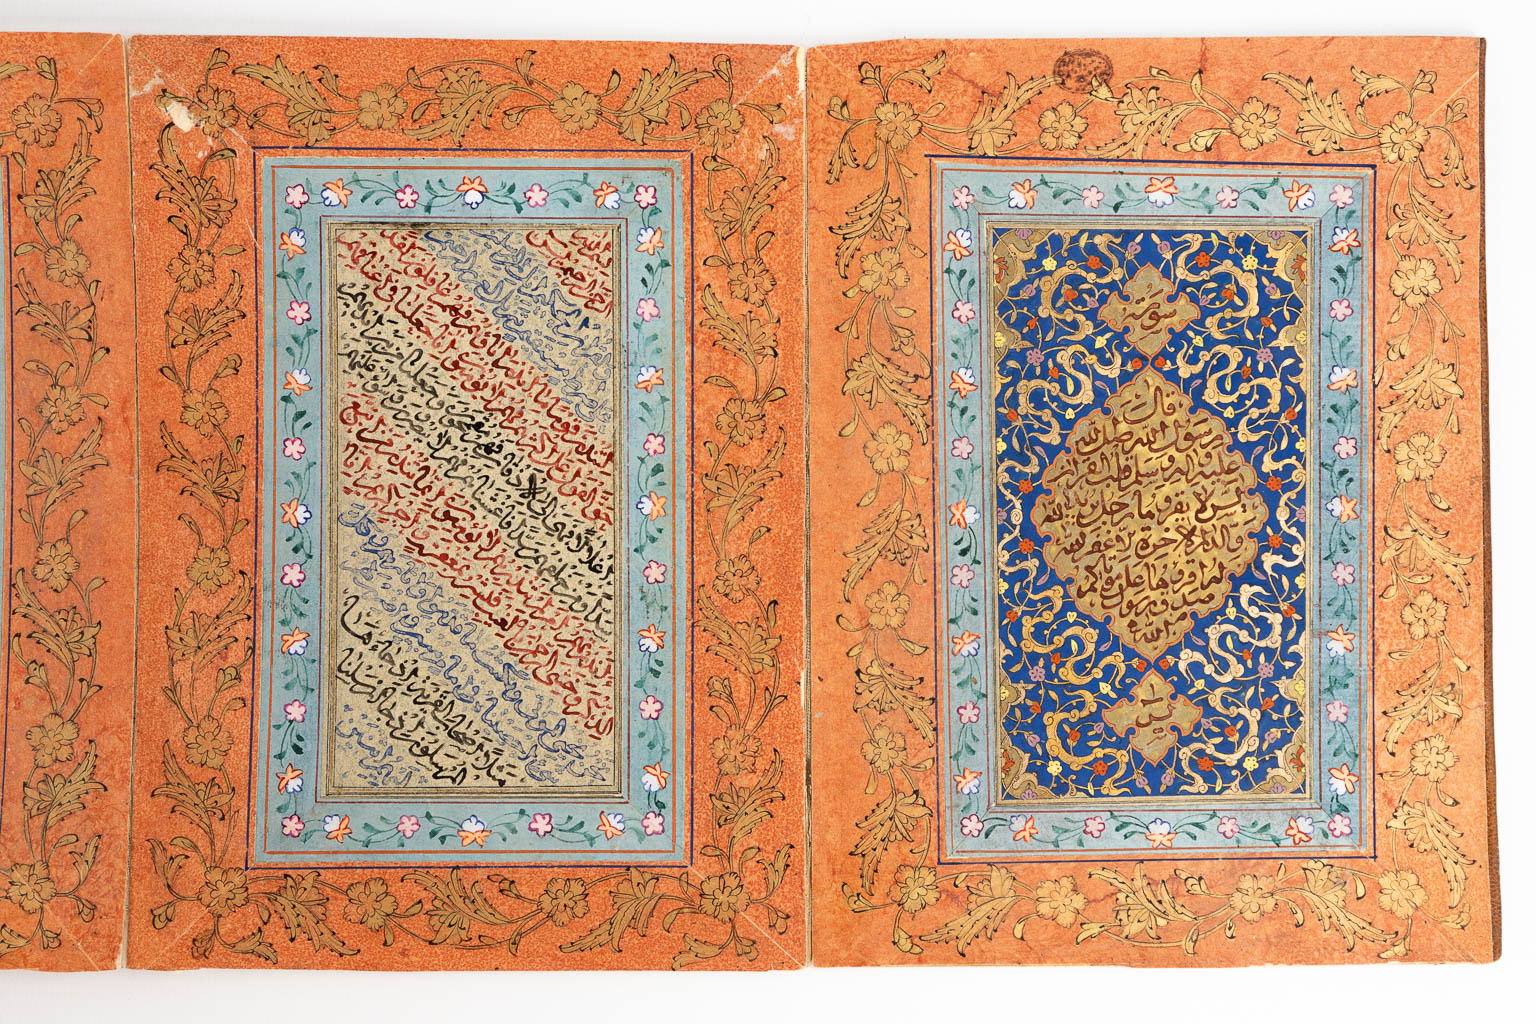 An album of Ottoman Calligraphic Panels (QITA) early 20th C. (W:15 x H:20 cm)